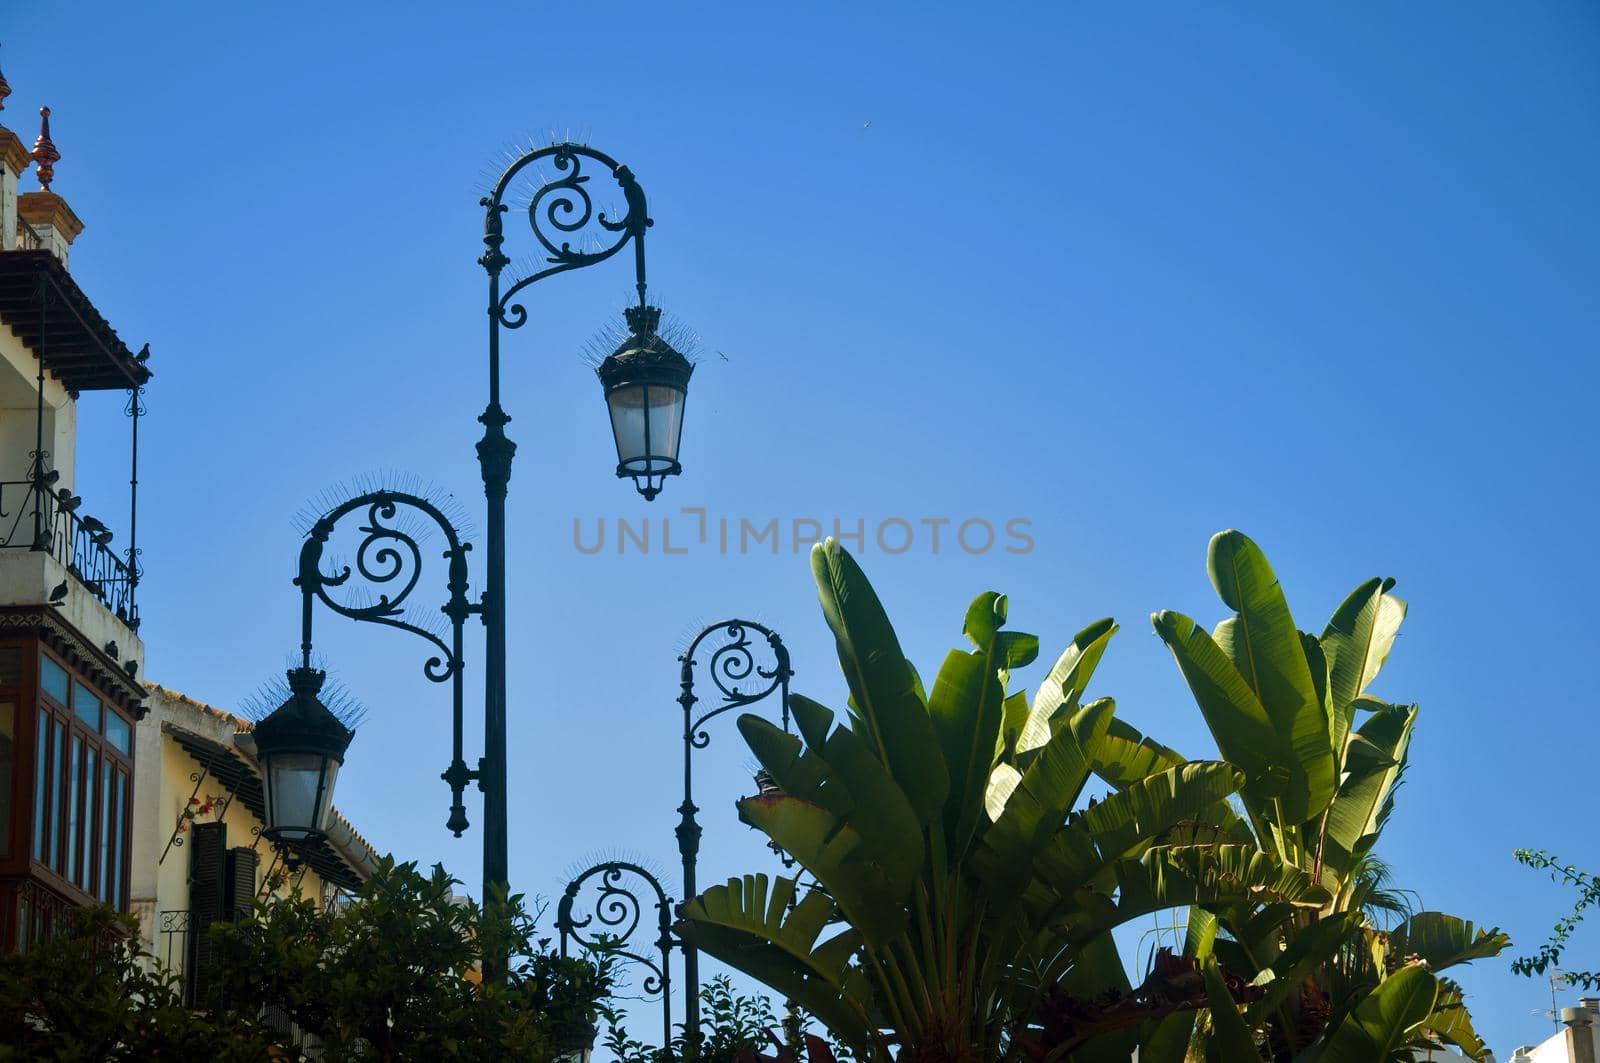 Black lanterns, palm trees on the background of blue sky